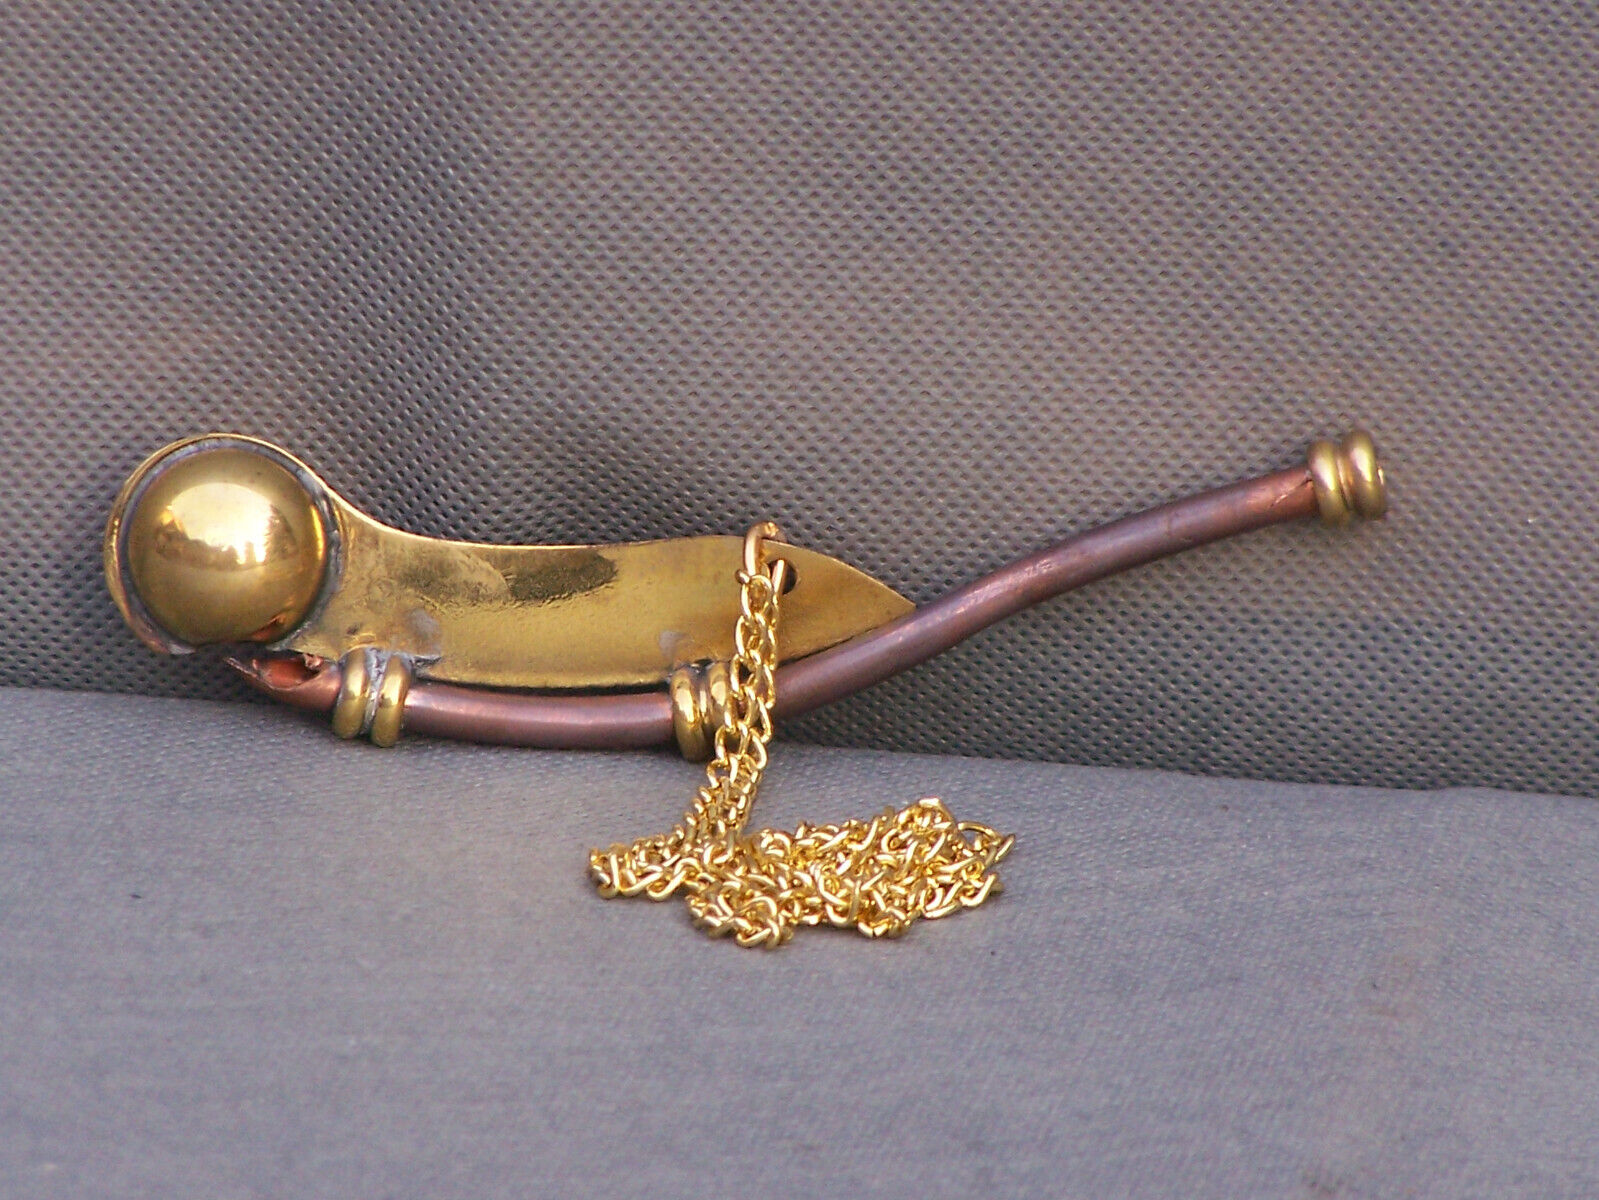 Vintage Brass & Copper Boatman's Whistle & Chain Boatswain's Call Bosun's Navy